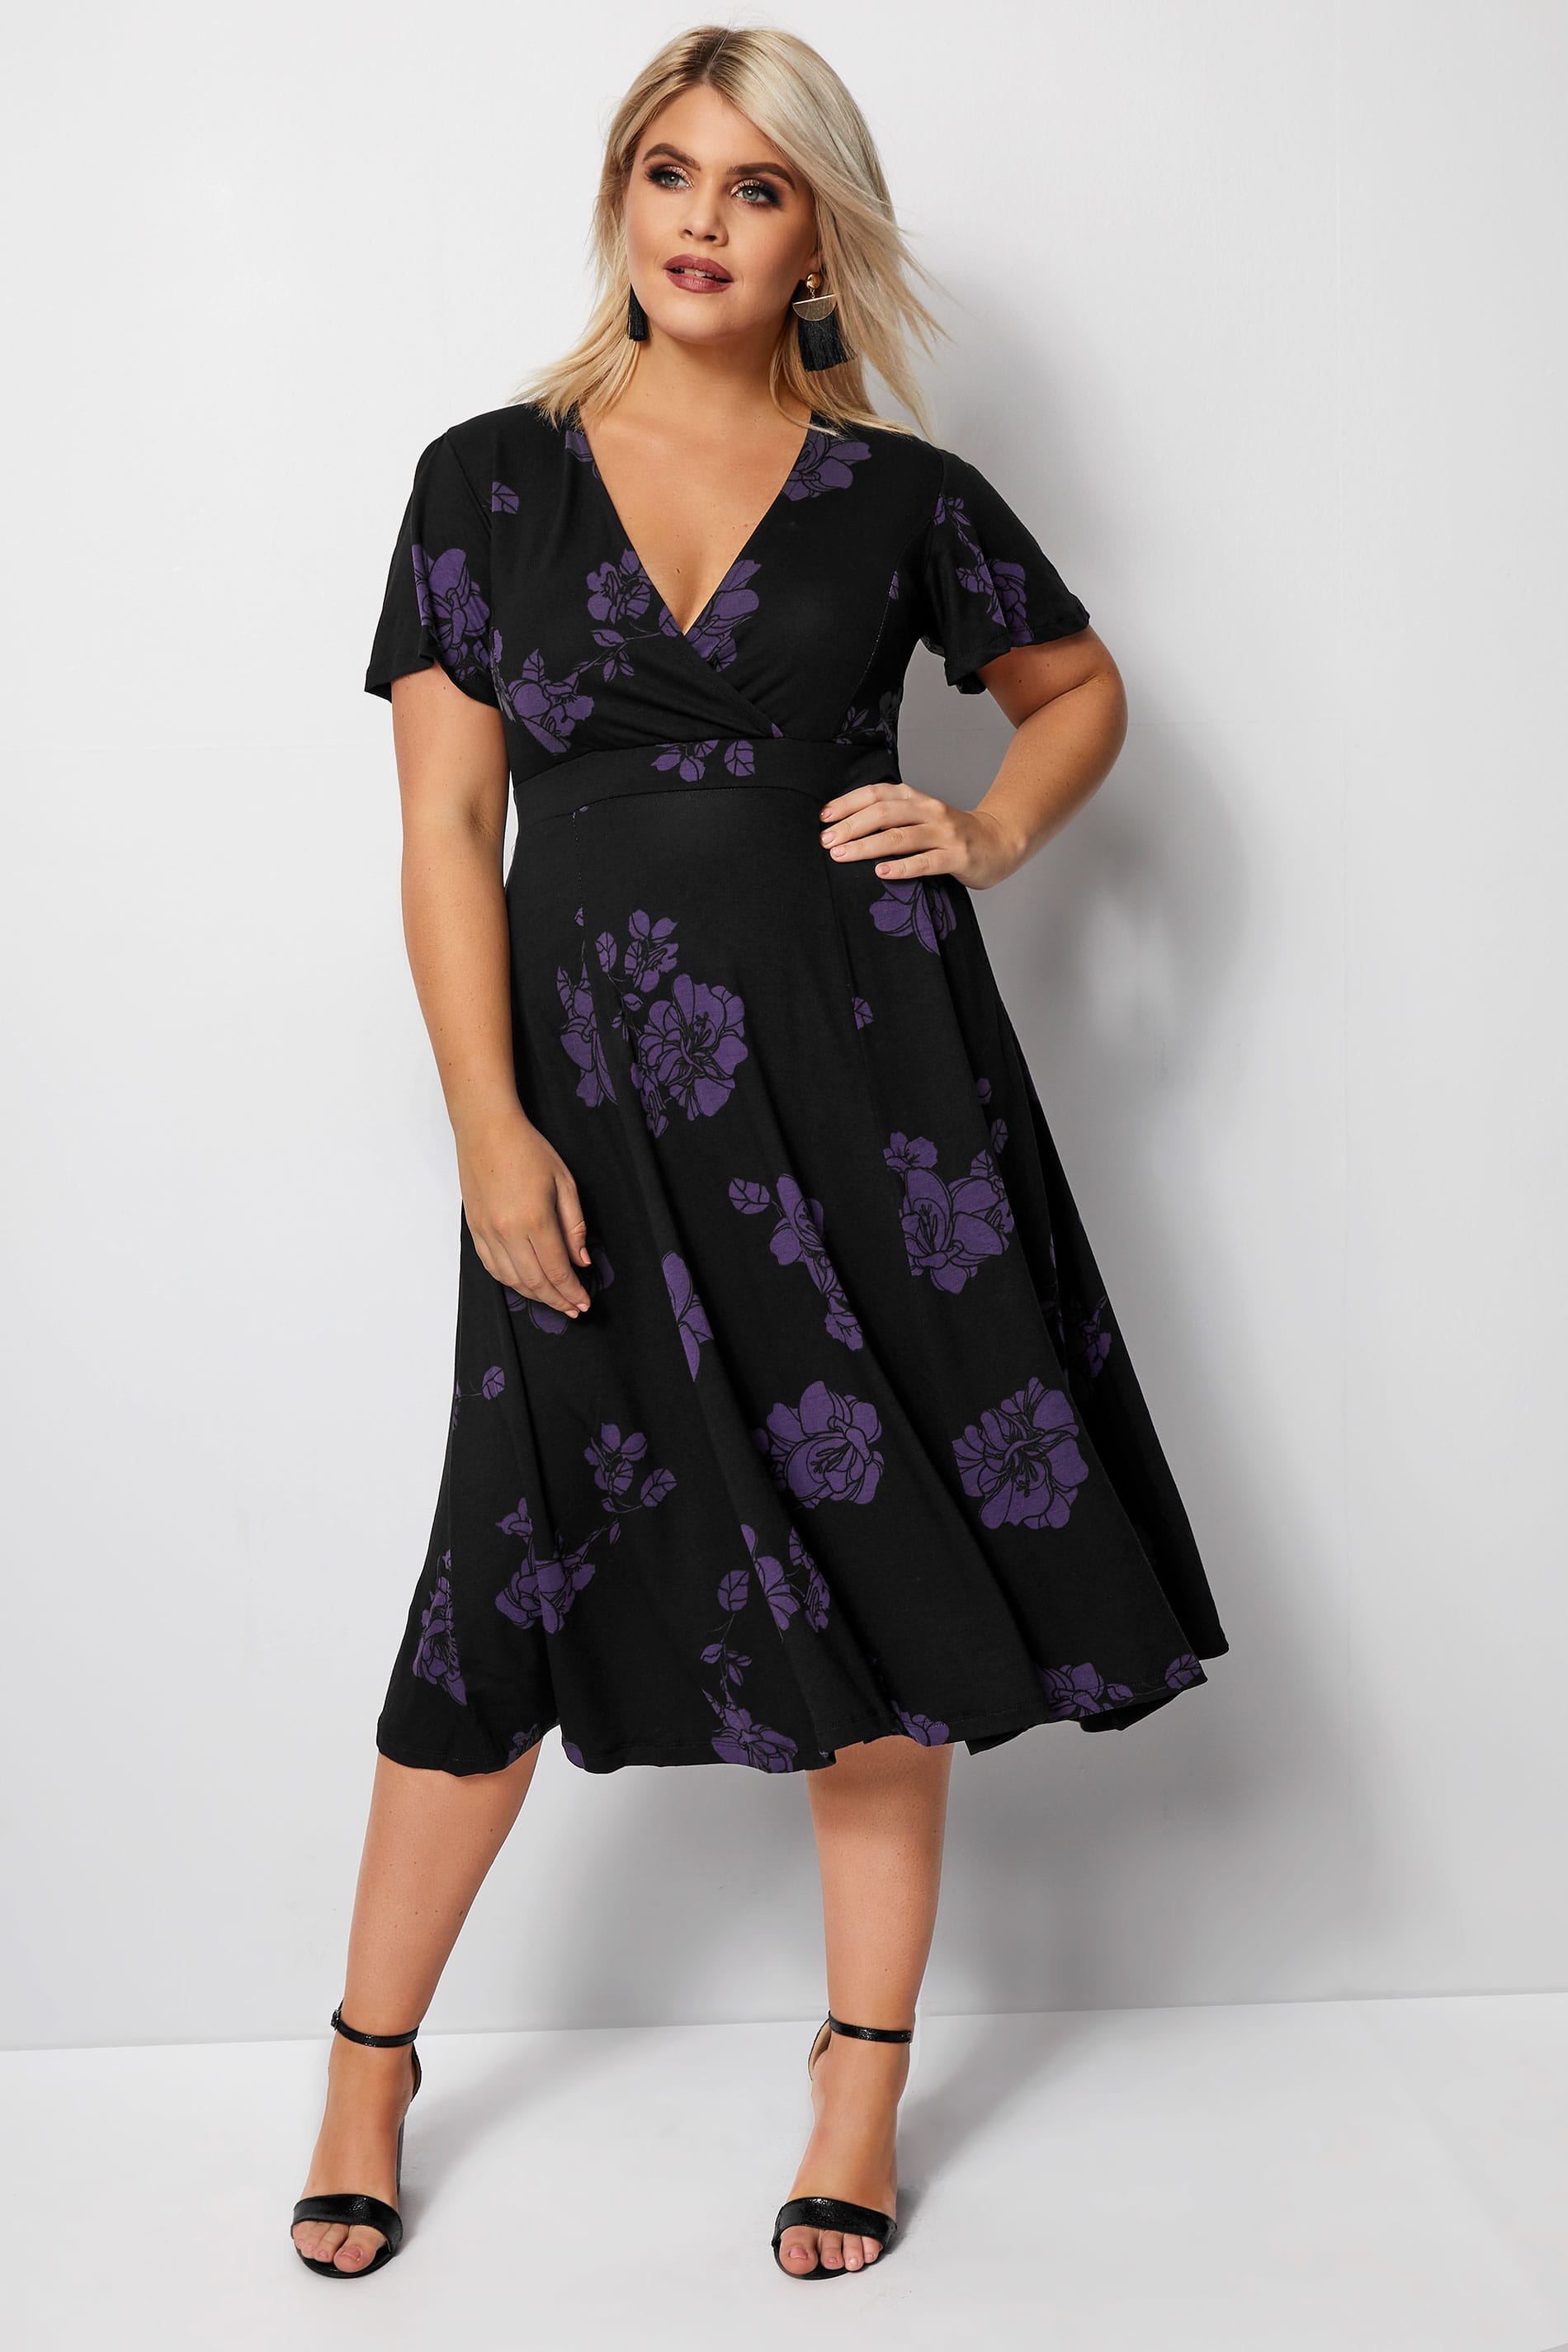 Black Floral Fit & Flare Wrap Dress, Plus size 16 to 36